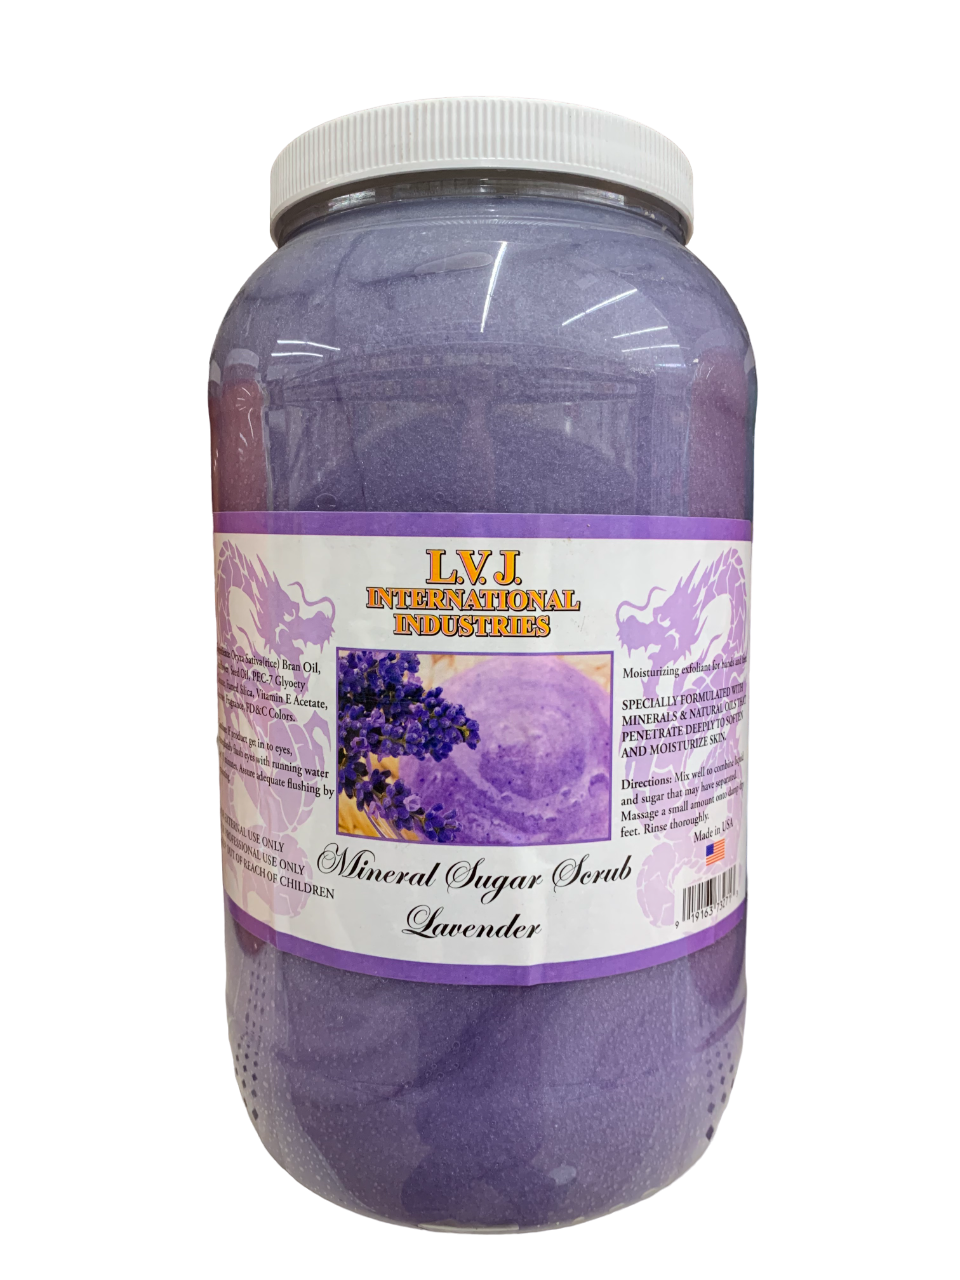 L.V.J Mineral Honey Sugar Scrub Lavender